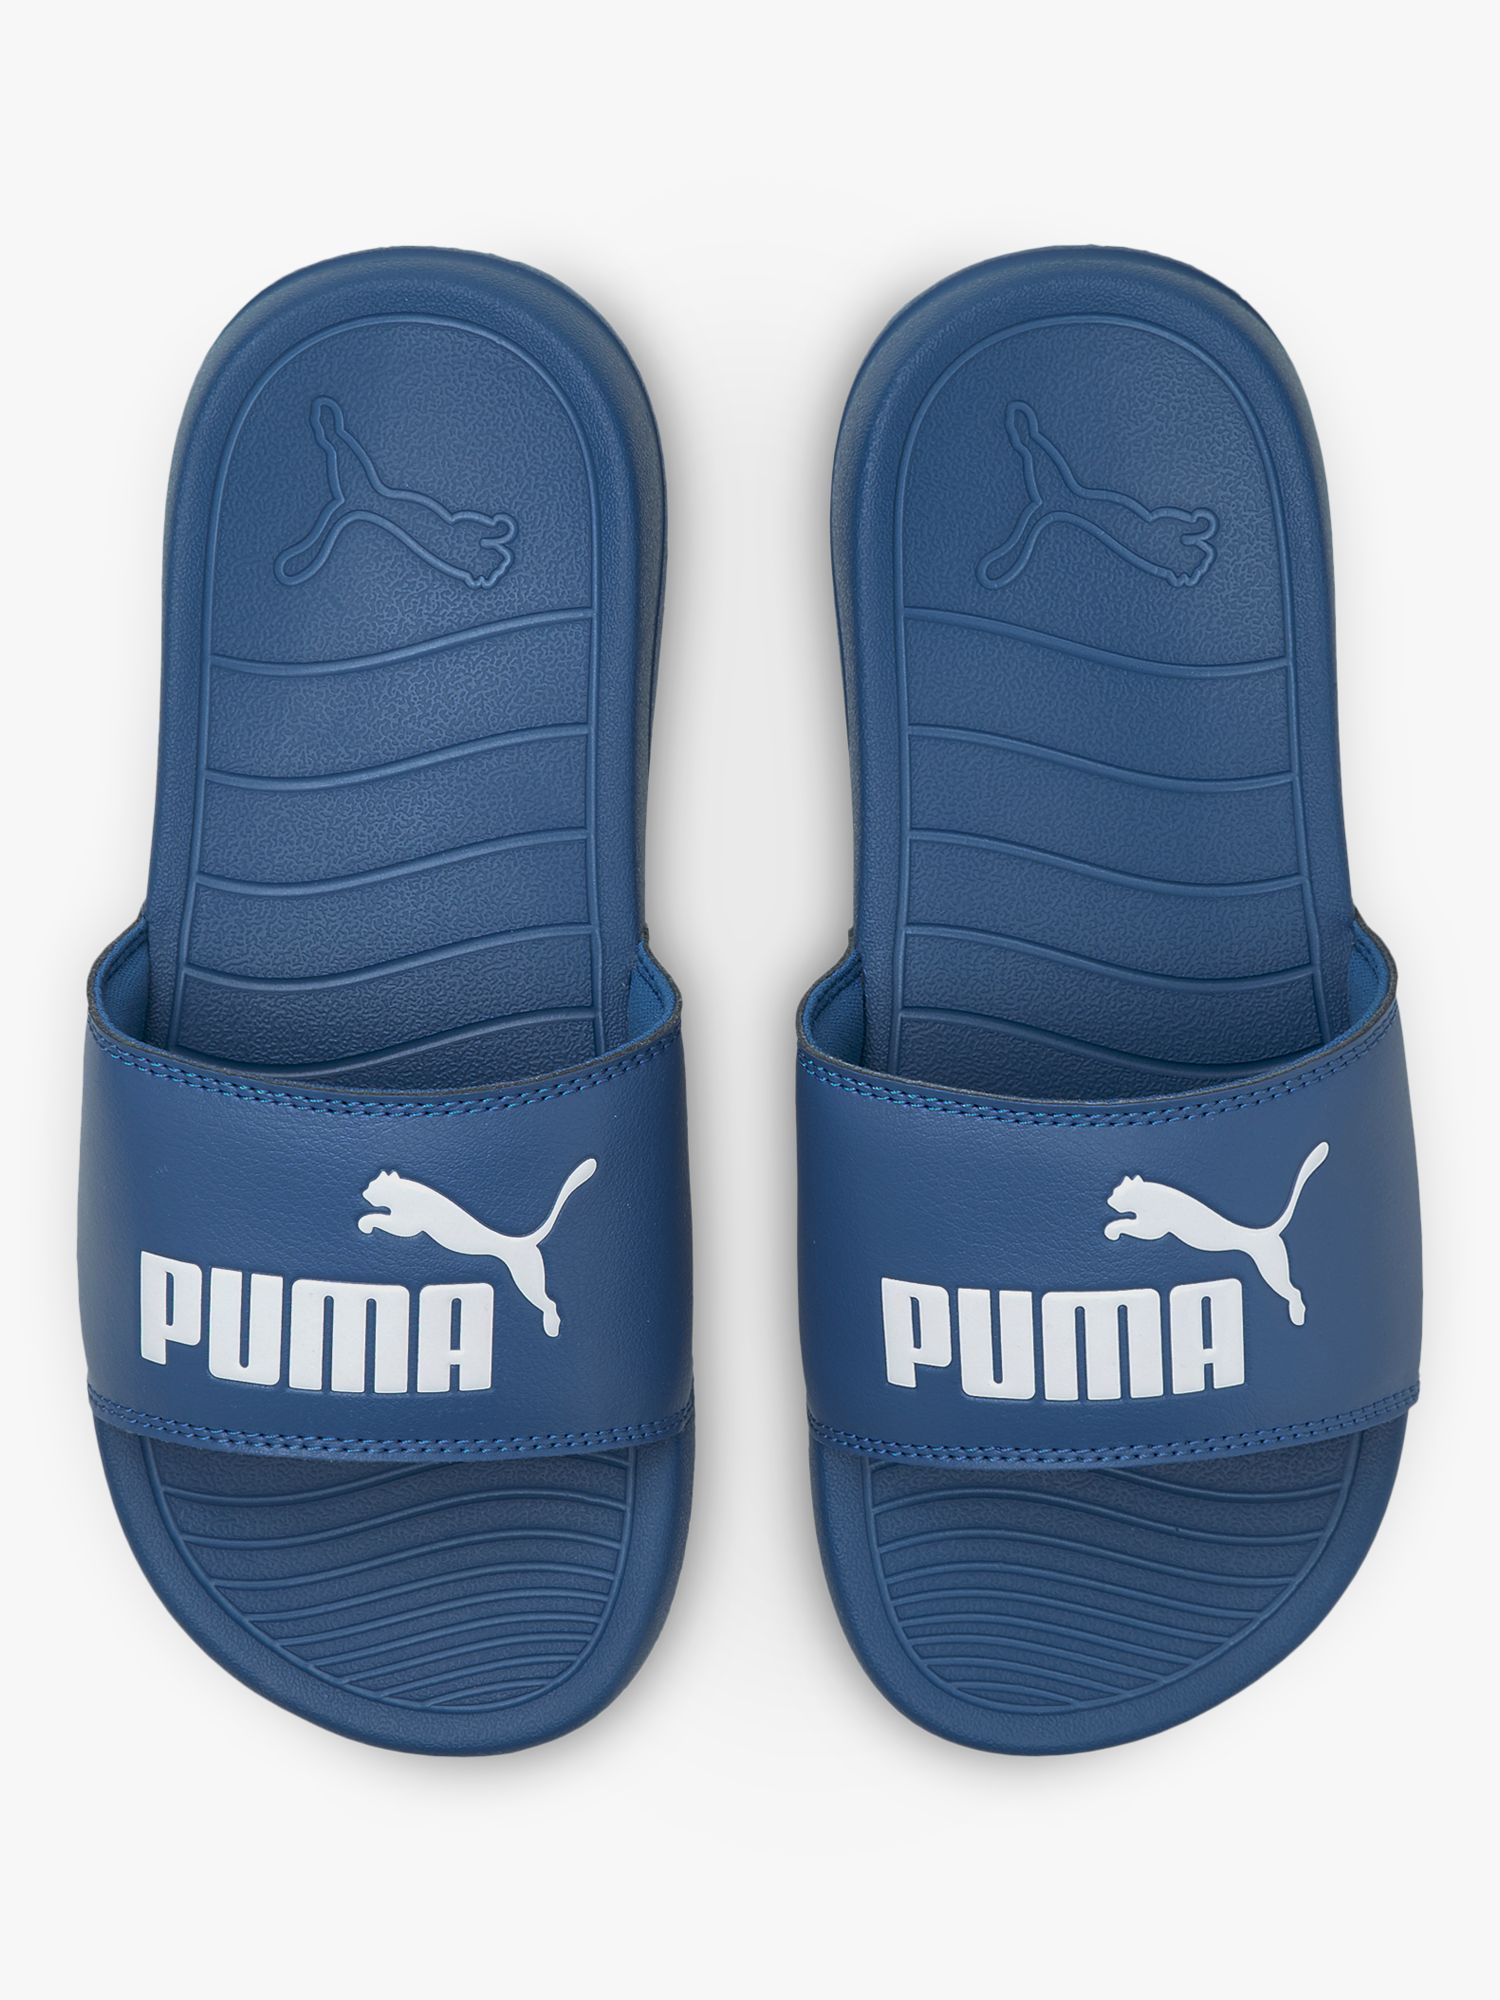 PUMA Children's Popcat Sliders, Blue at John Lewis & Partners